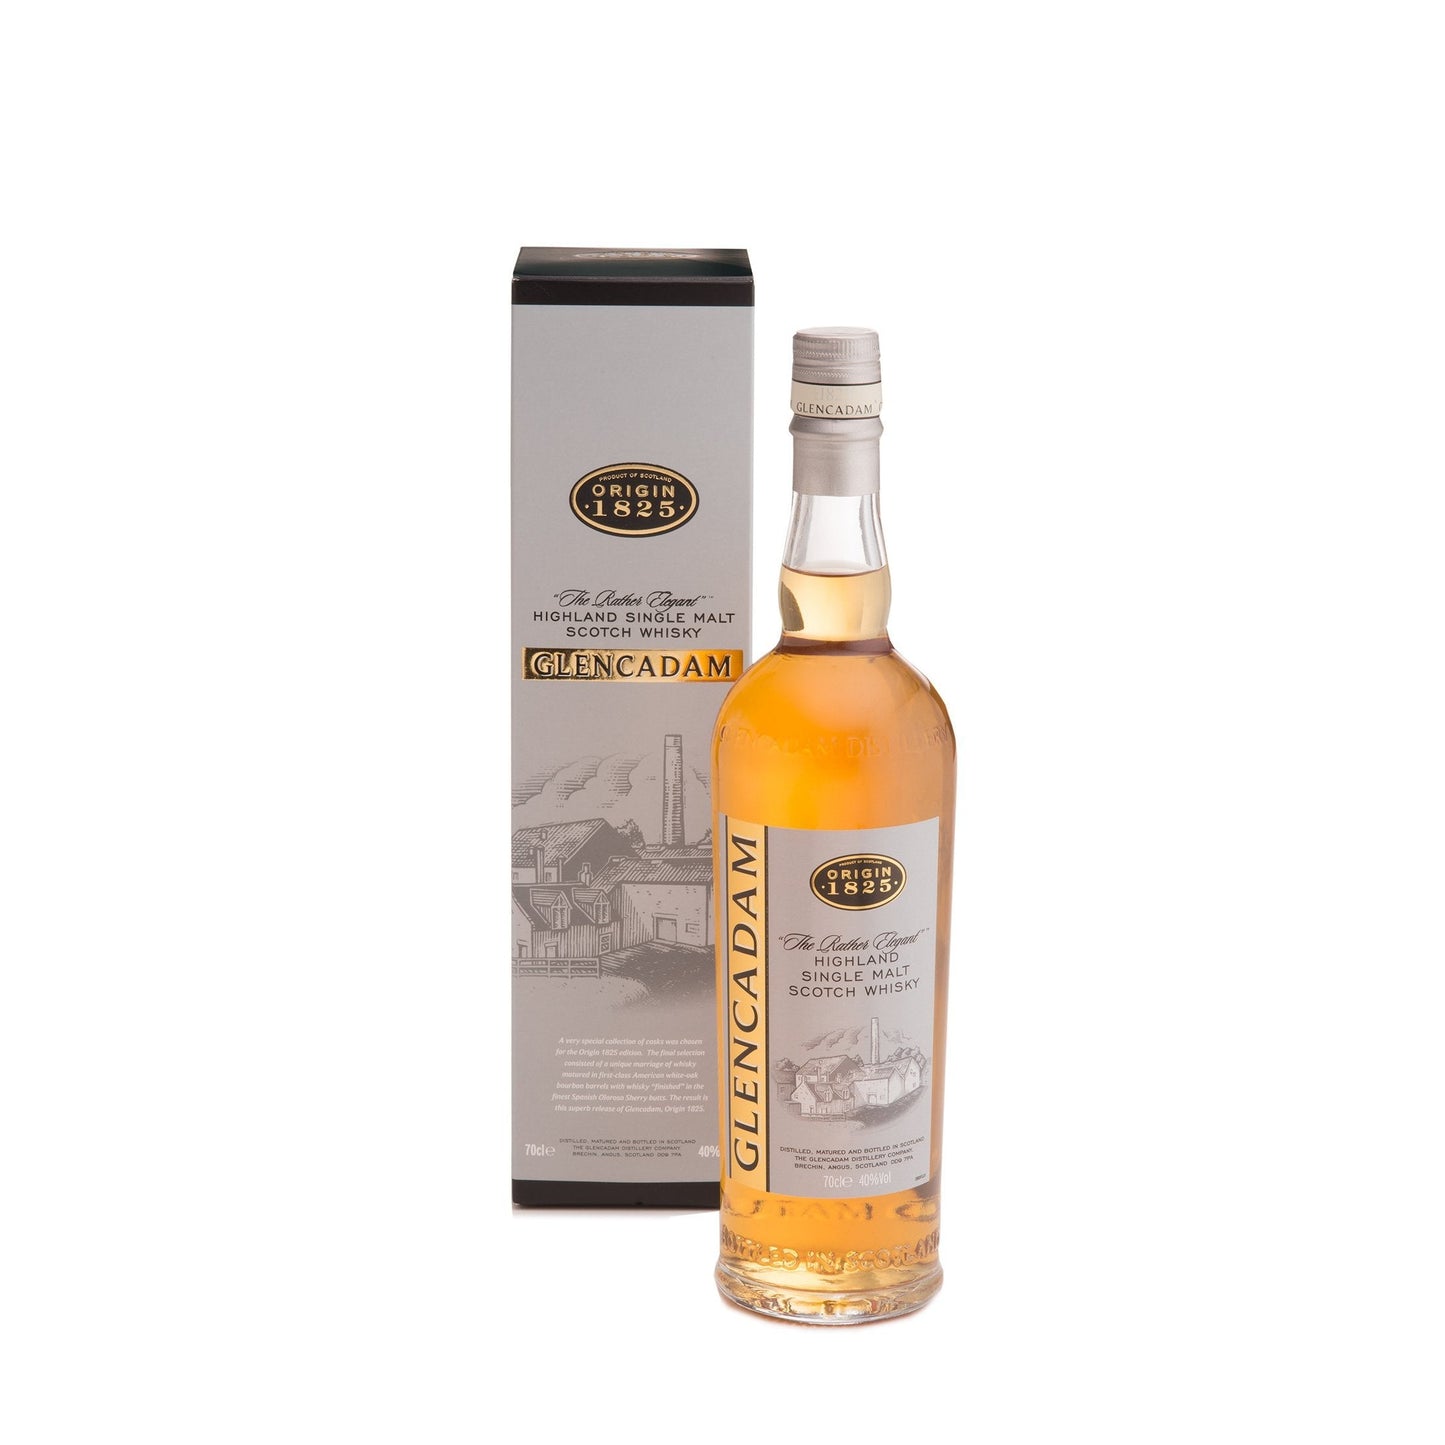 Glencadam Origin 1825 - Single Malt Scotch Whisky-Single Malt Scotch Whisky-5021349702832-Fountainhall Wines